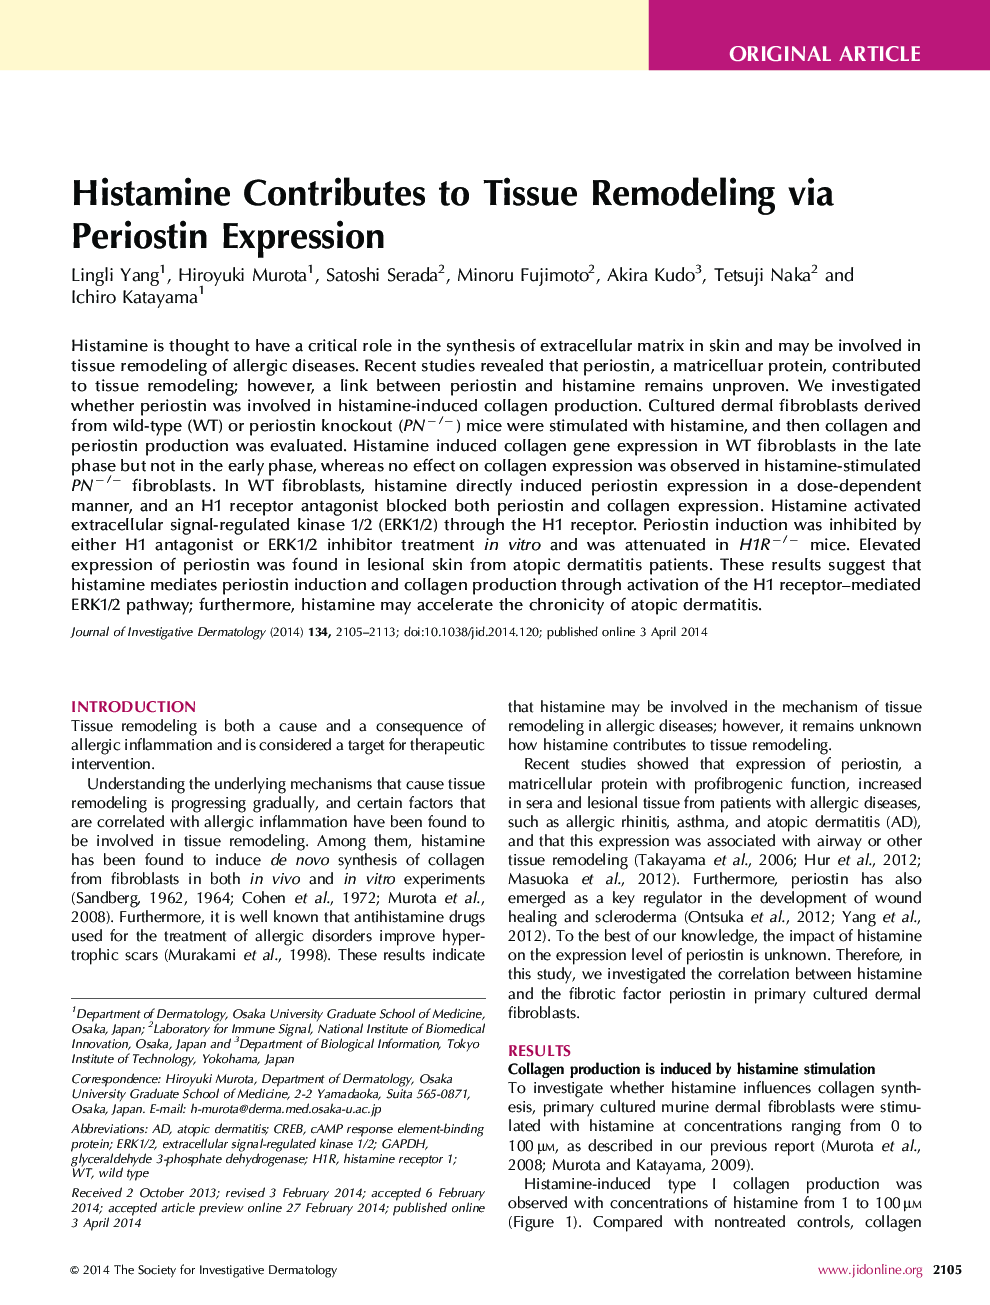 Original ArticleHistamine Contributes to Tissue Remodeling via Periostin Expression